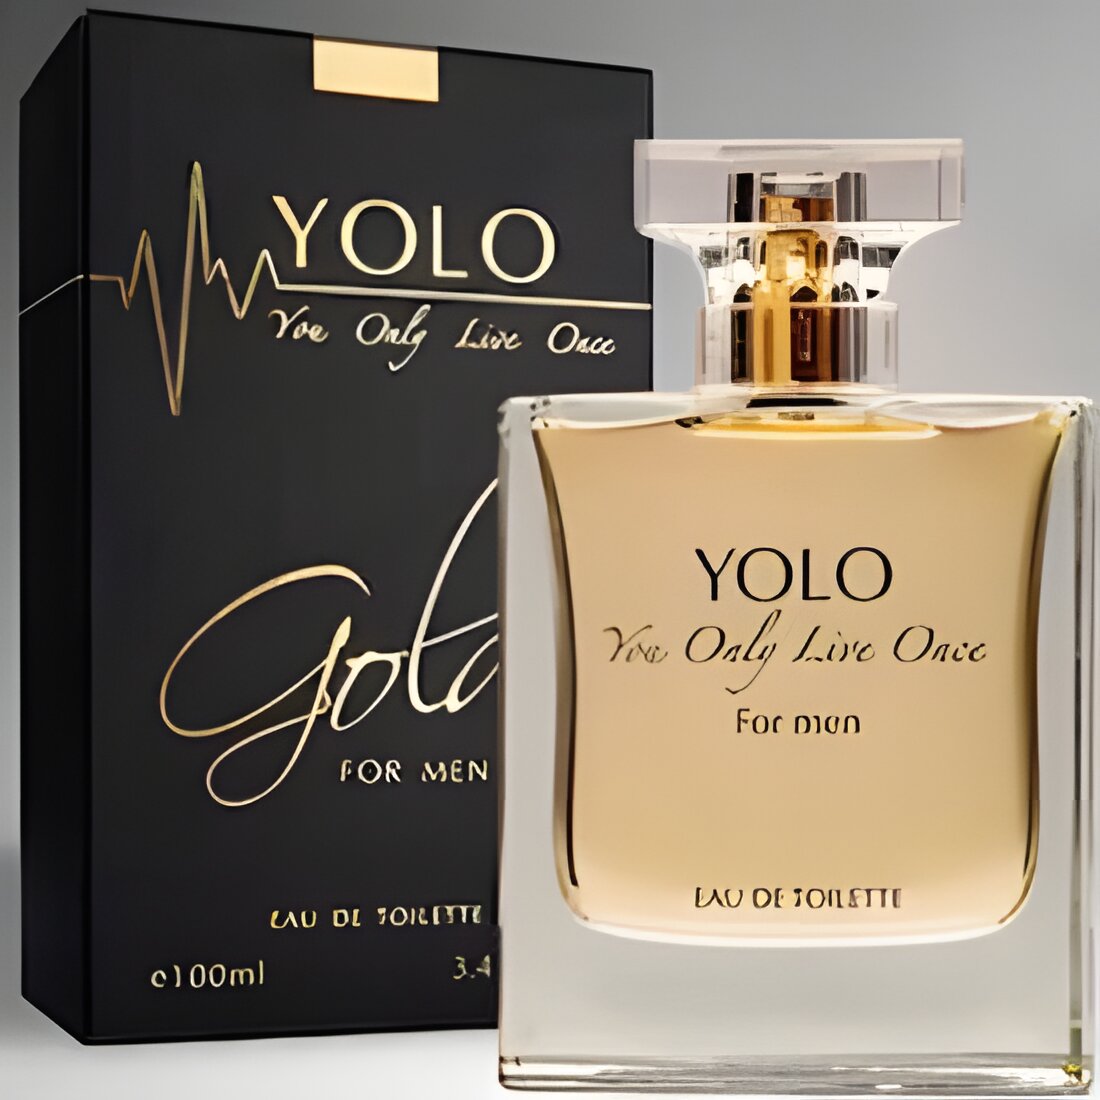 Free Yolo Fragrance Sample